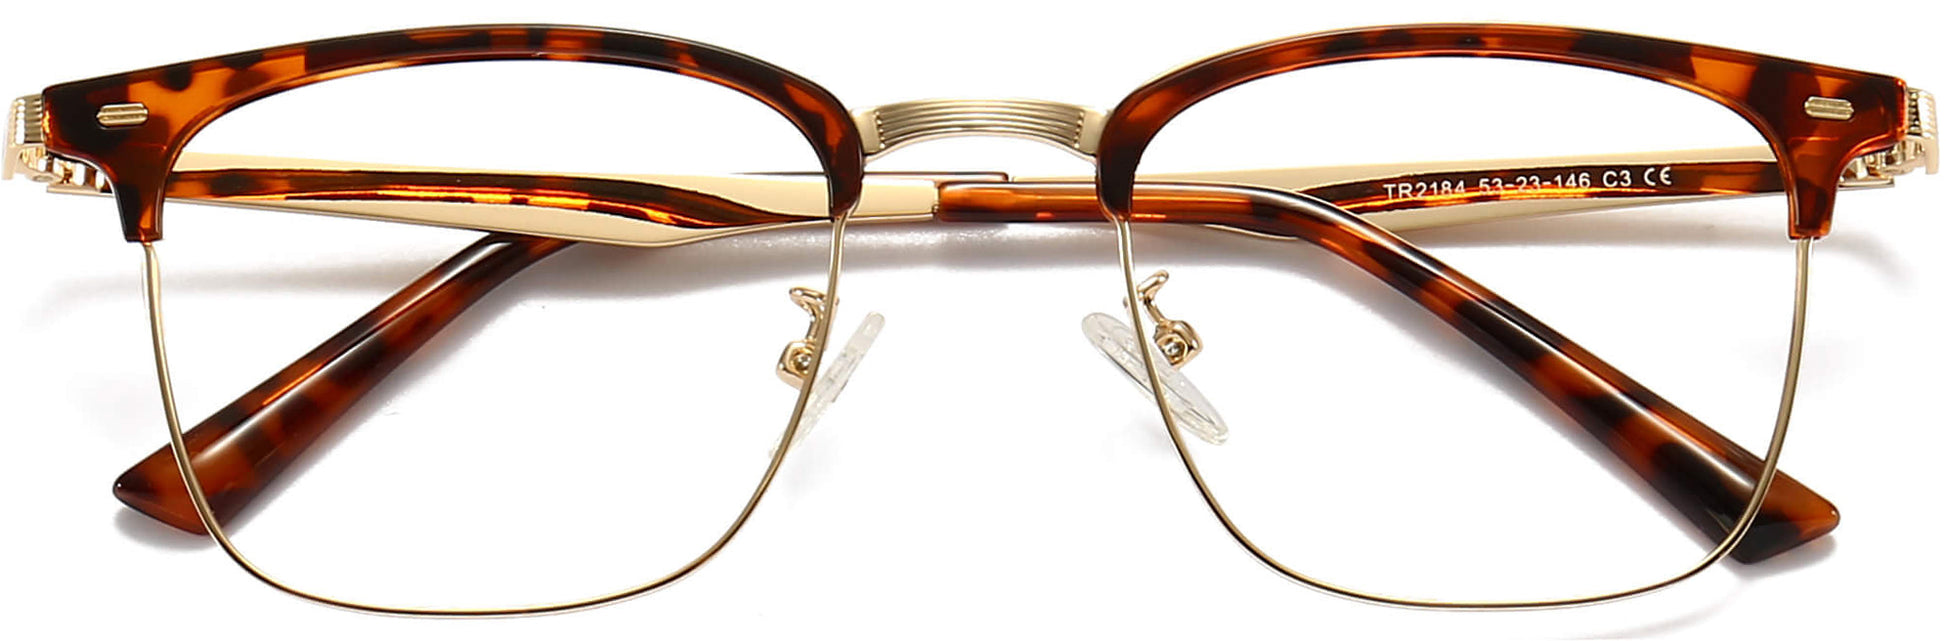 Finnley Browline Tortoise Eyeglasses from ANRRI, closed view